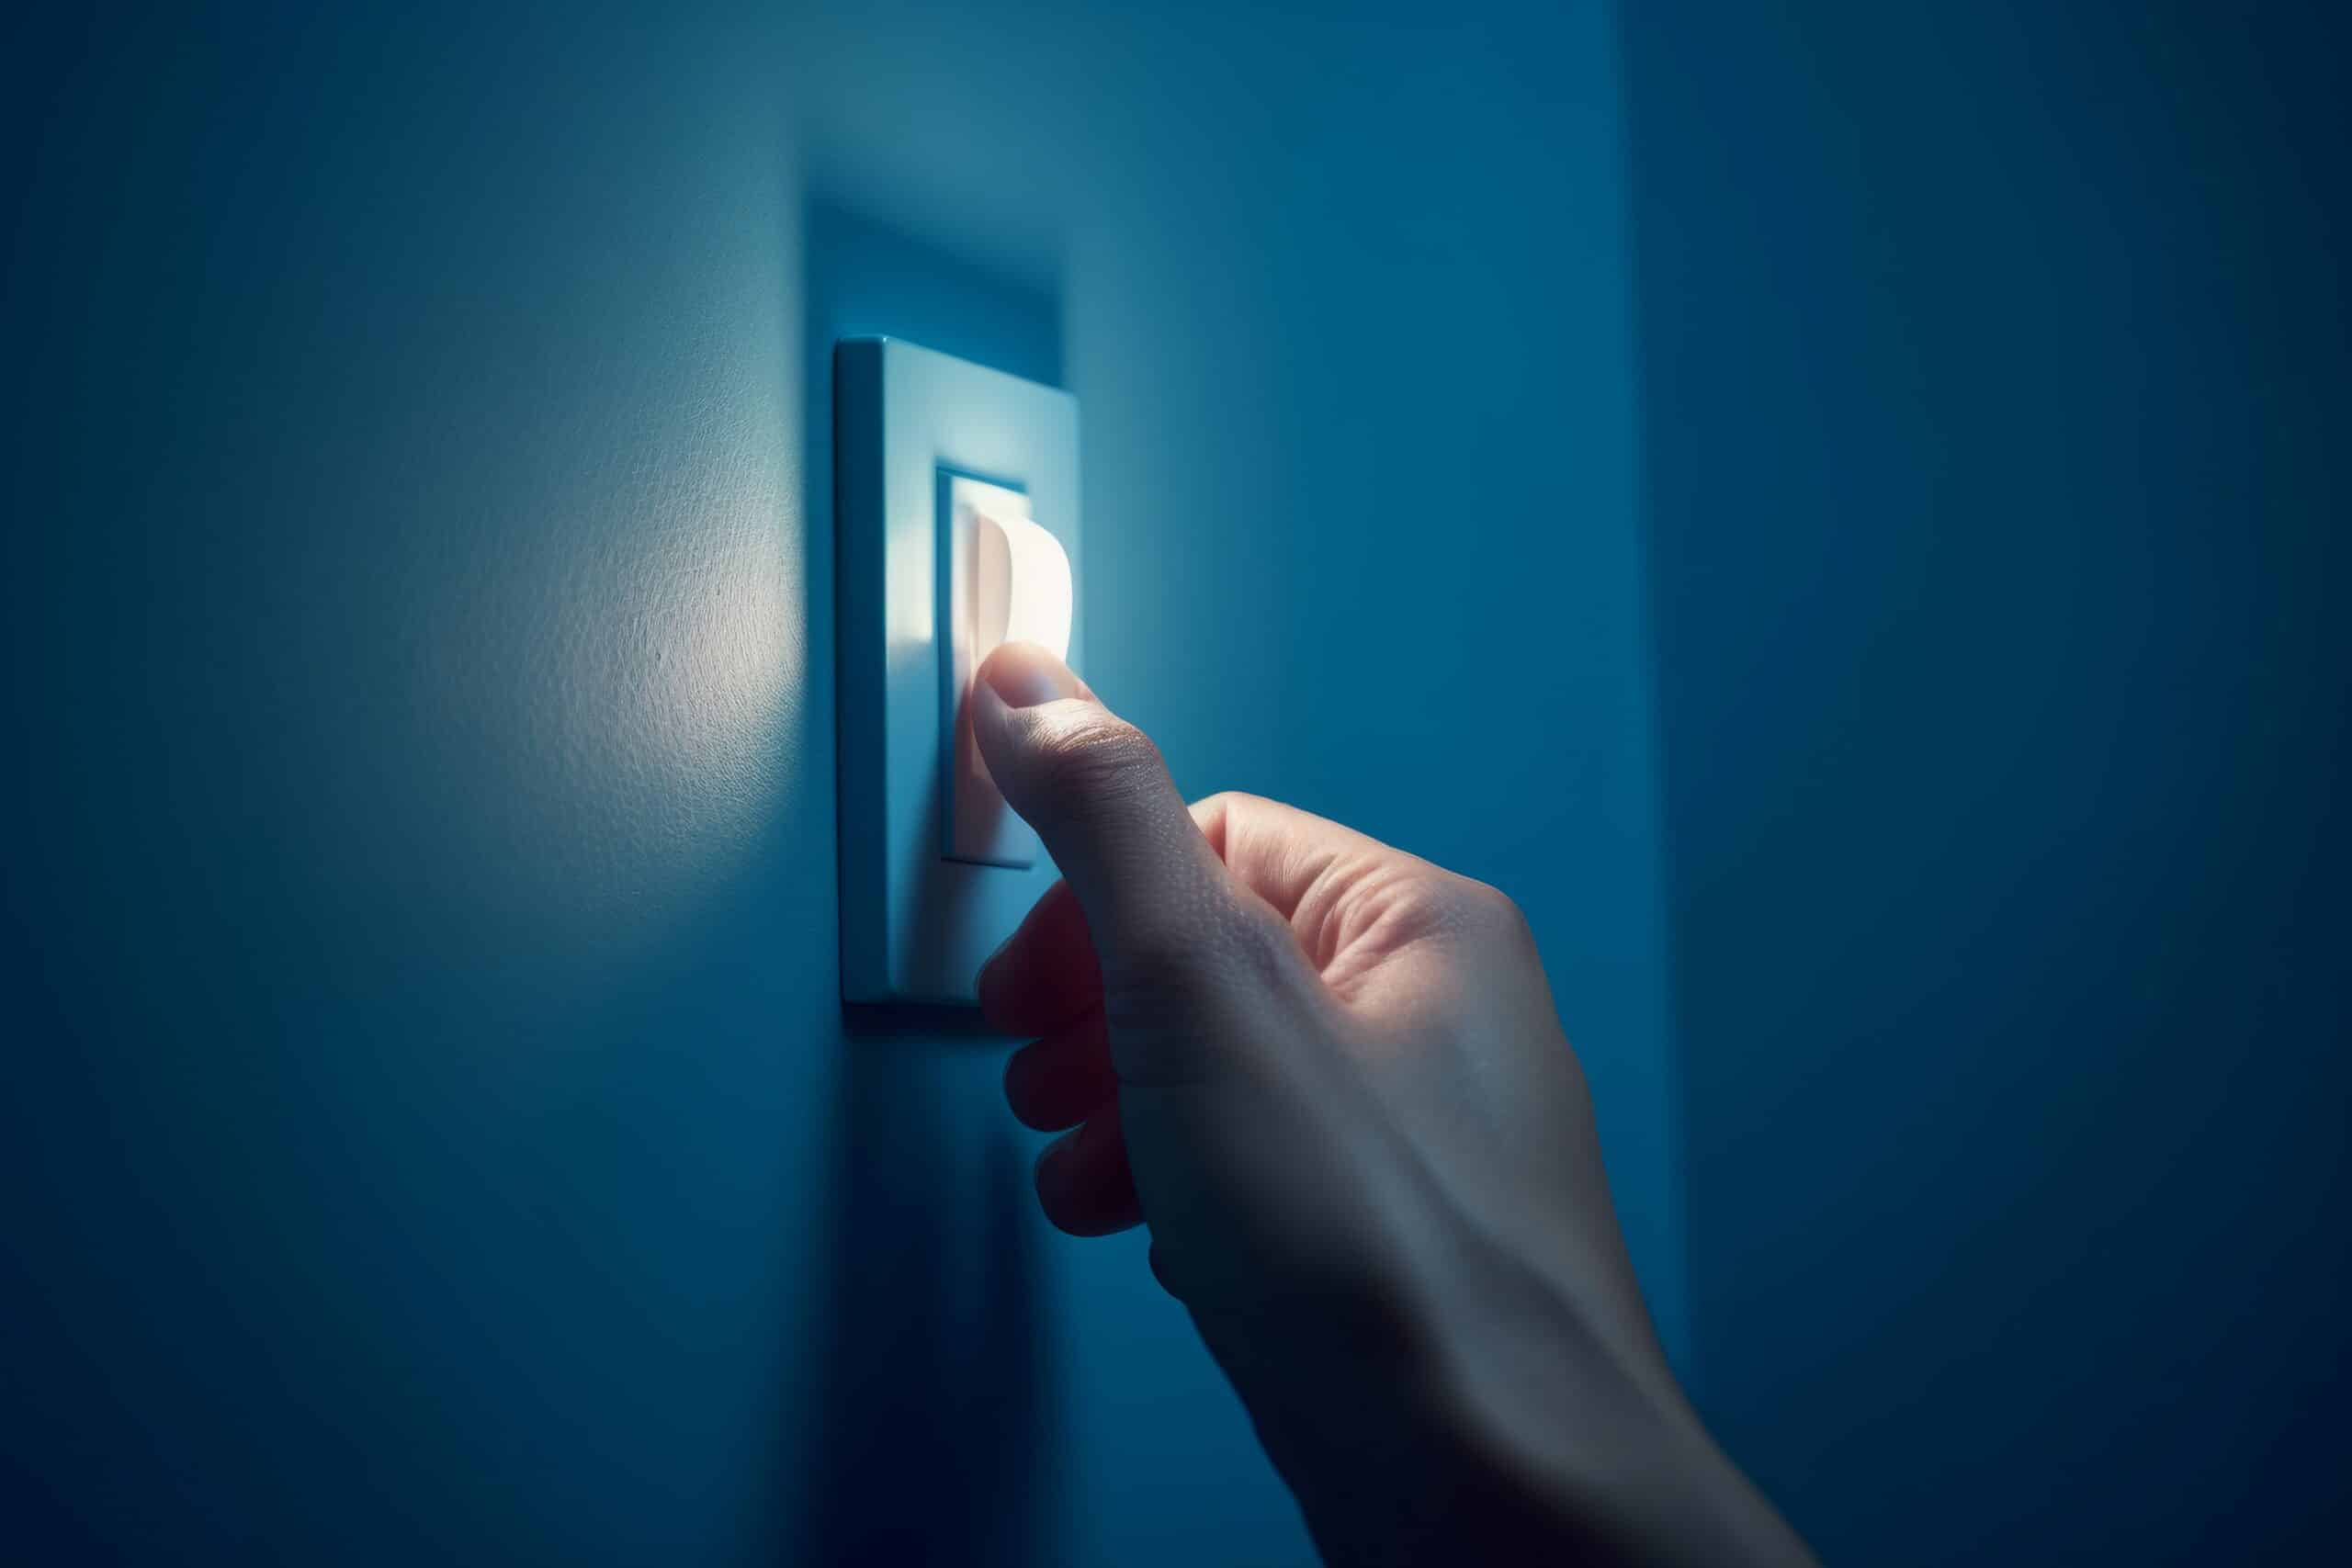 www.appr.com : How To Install A Smart Light Switch?